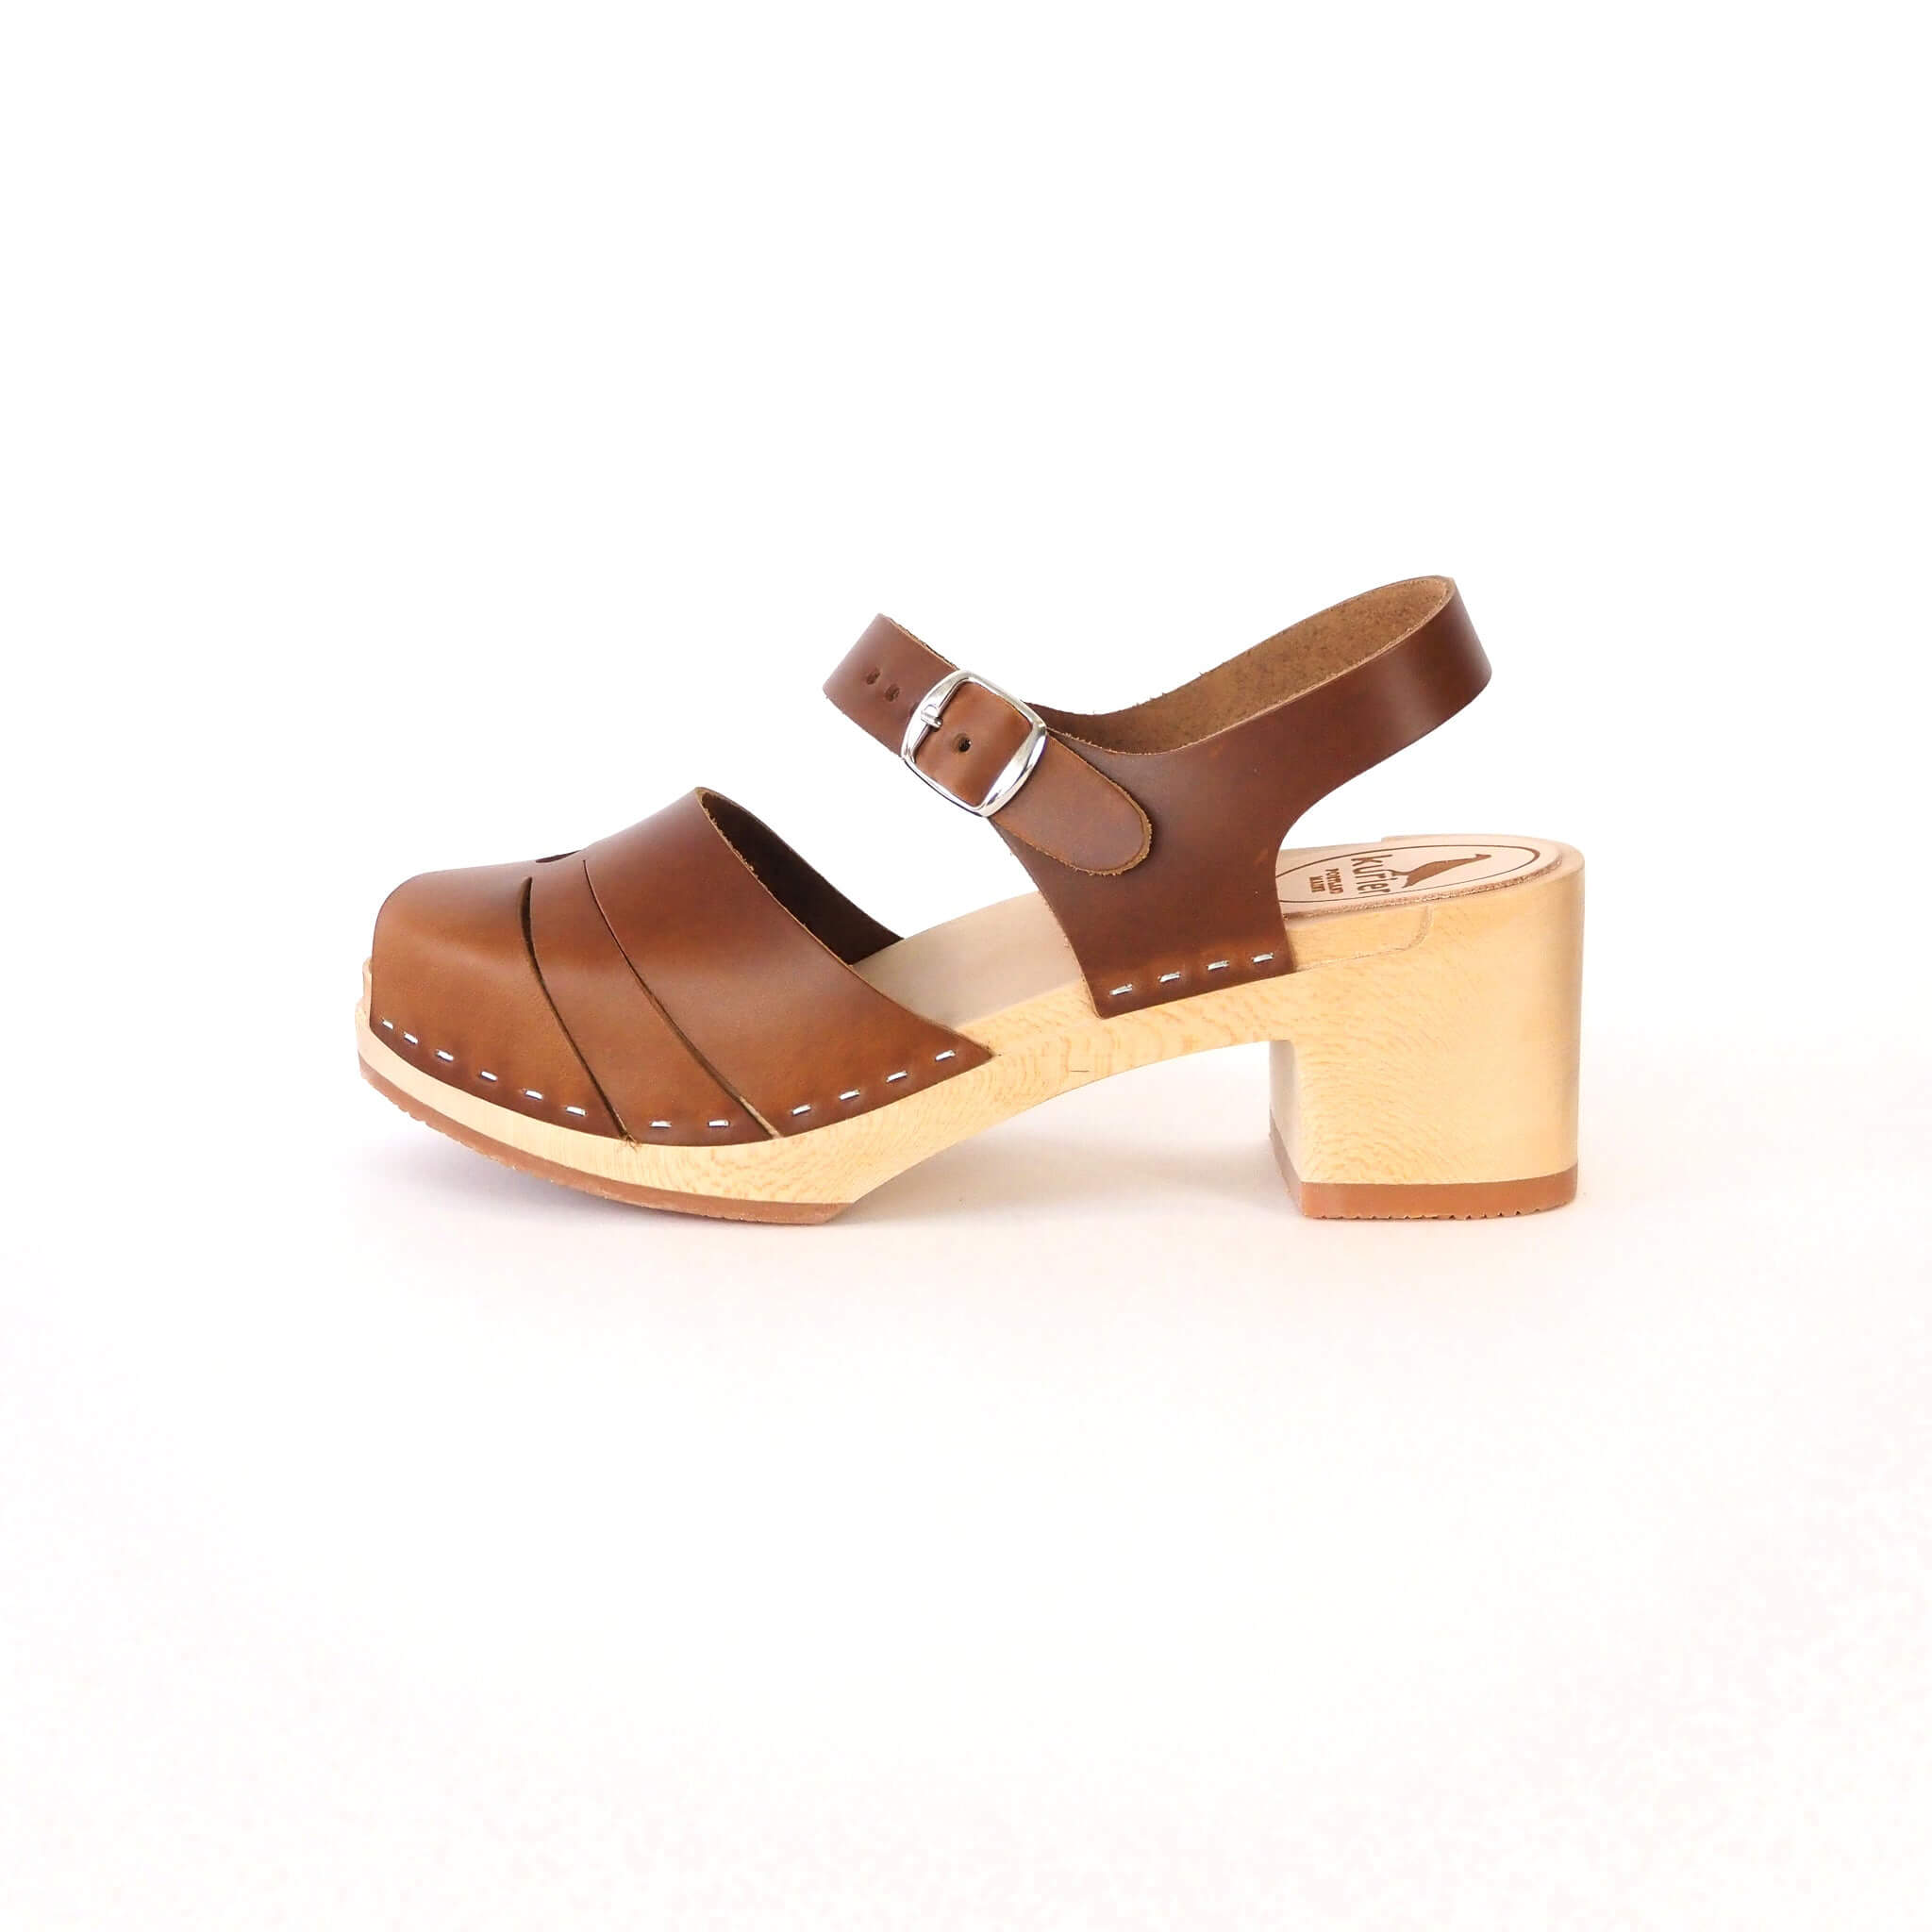 luna clog high heel peep toe sandal handmade italian leather wood - pecan side view